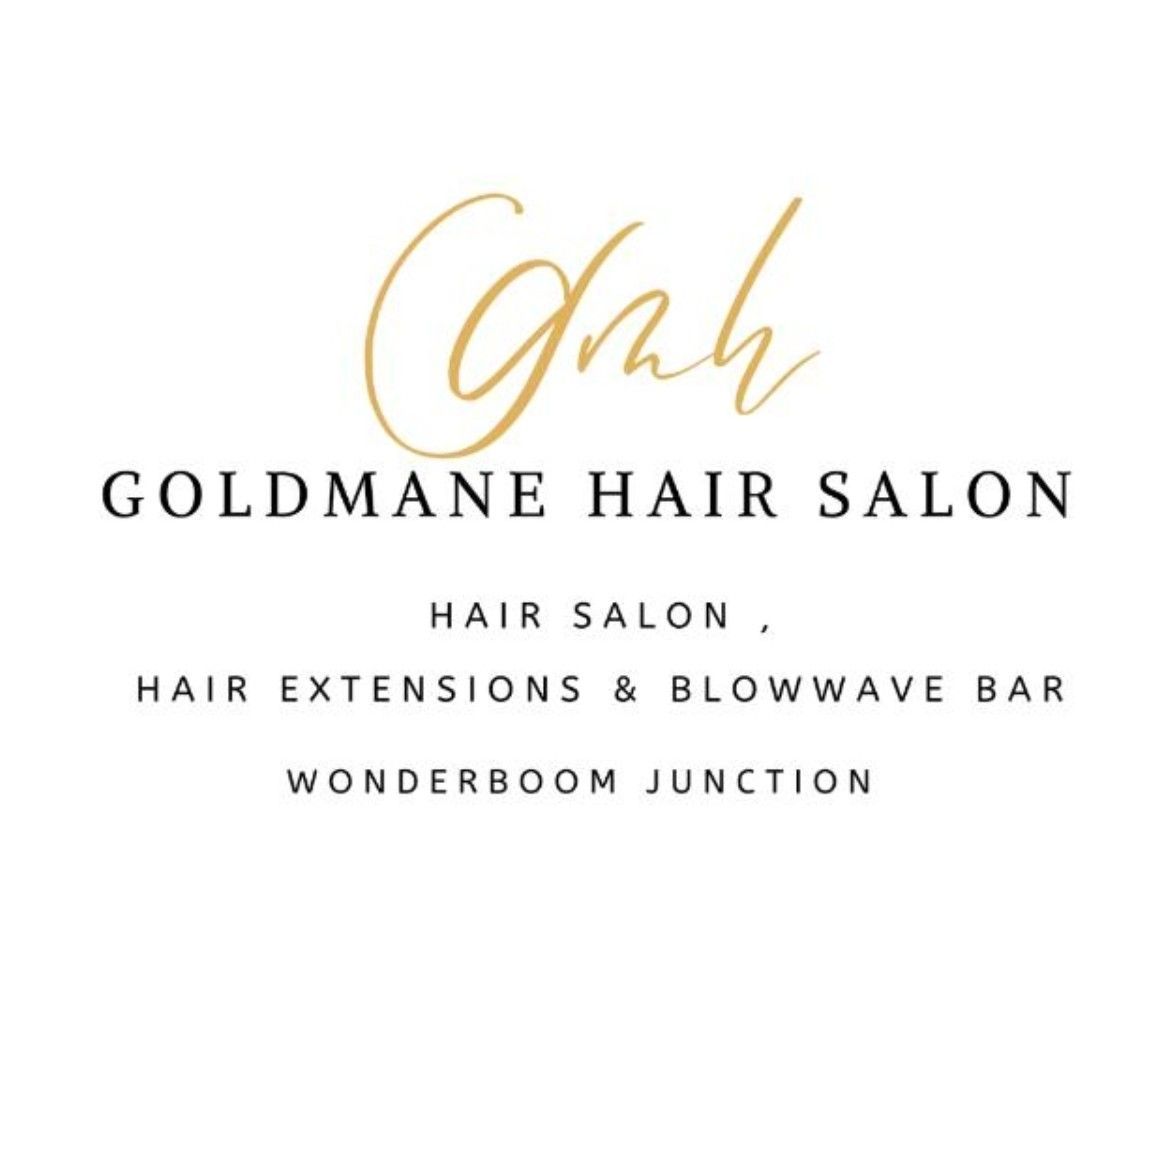 Gold Mane Hair Salon, 16Lavender Rd W, Wonderboom Junction Shopping Centre, 0182, Tshwane